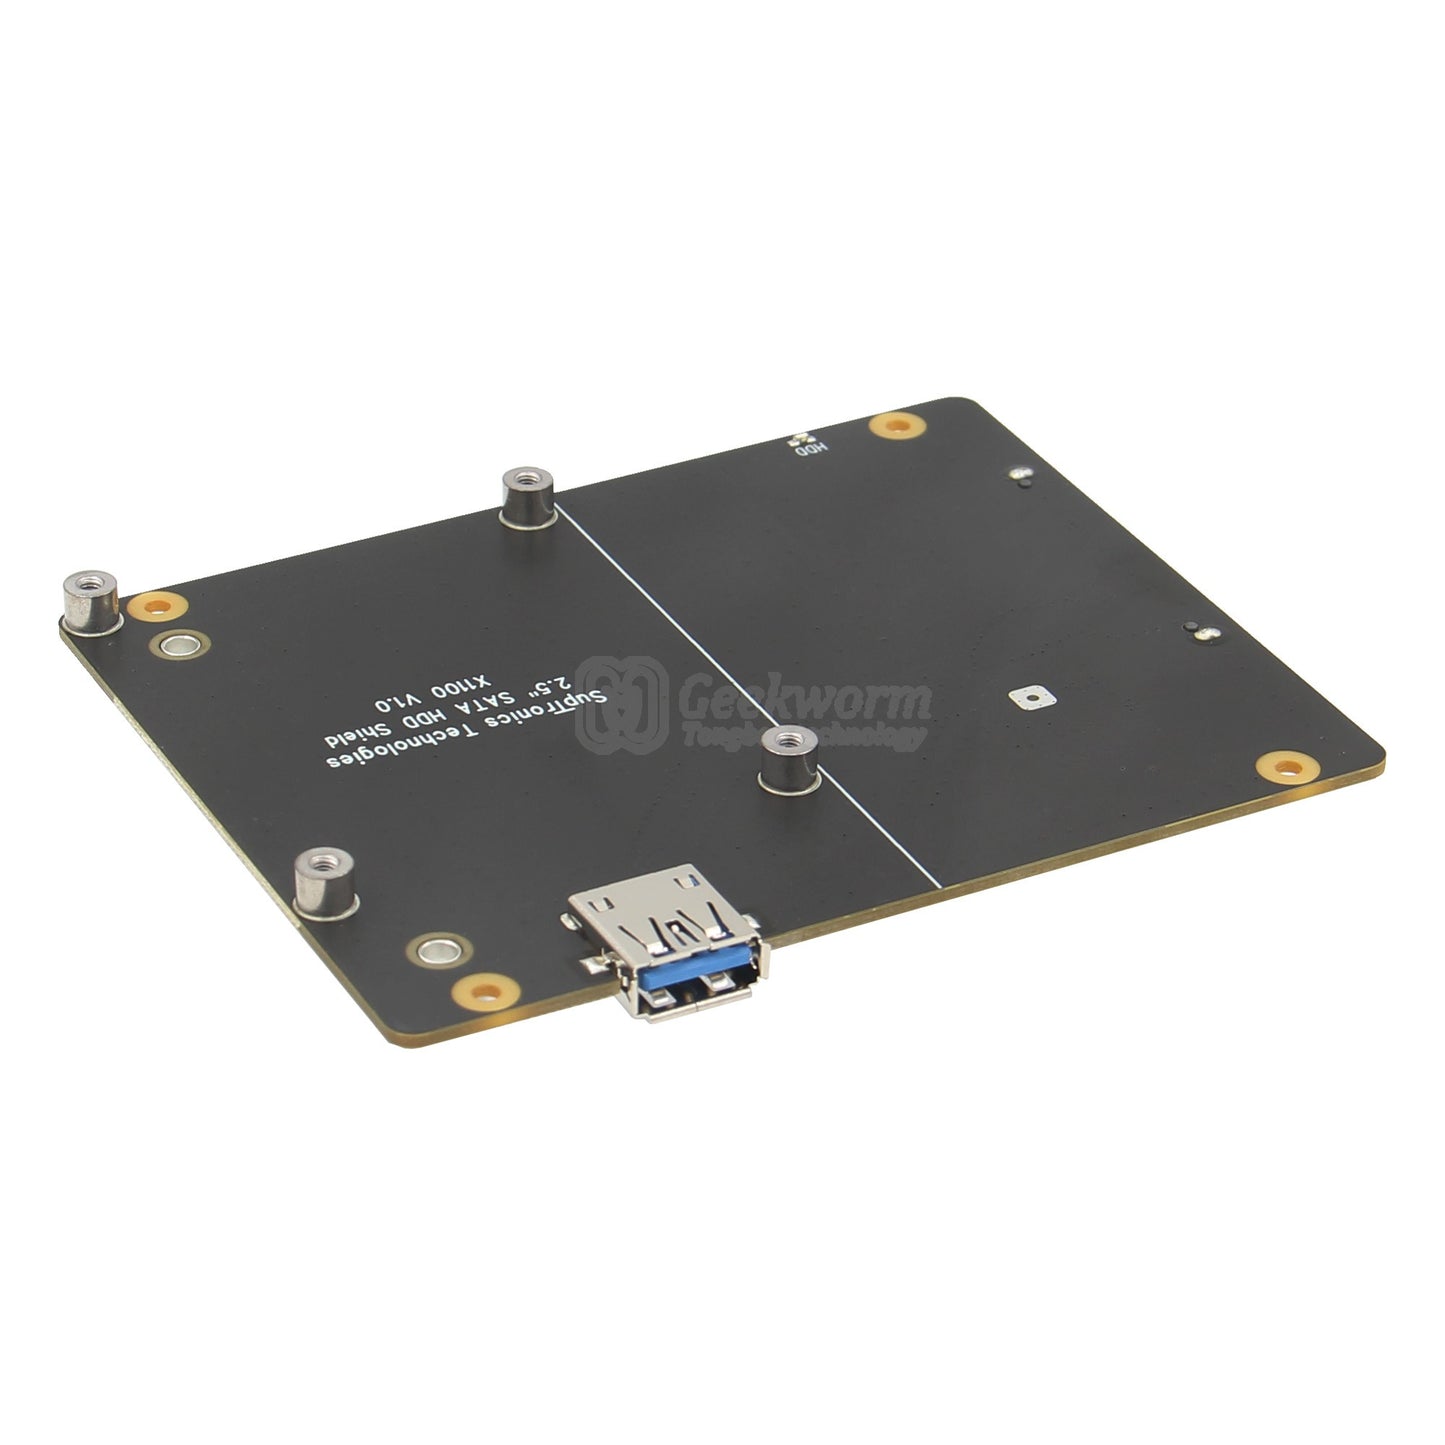 Geekworm X1100 2.5" SATA HDD/SSD Shield for Raspberry Pi 5